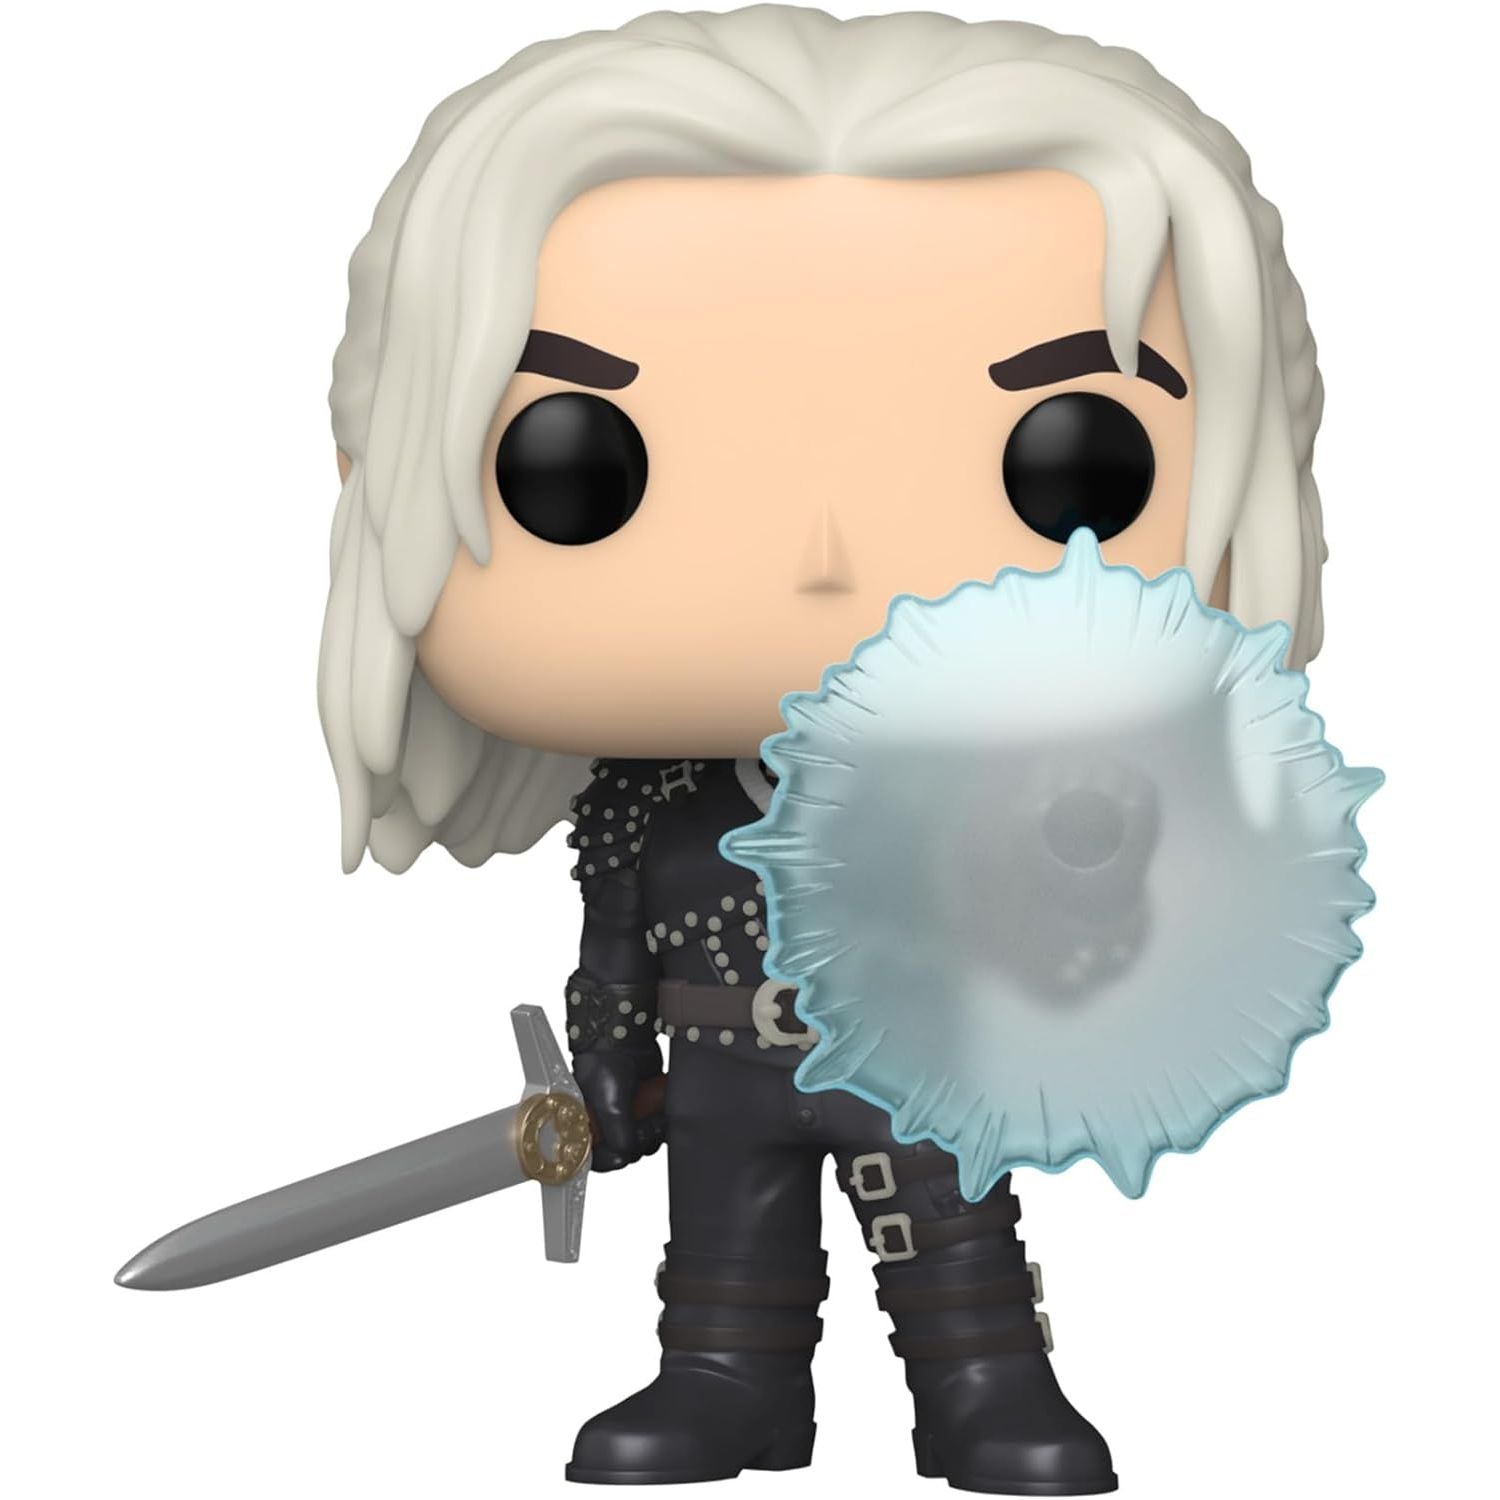 Funko Pop! TV: Netflix - The Witcher, Geralt with shield